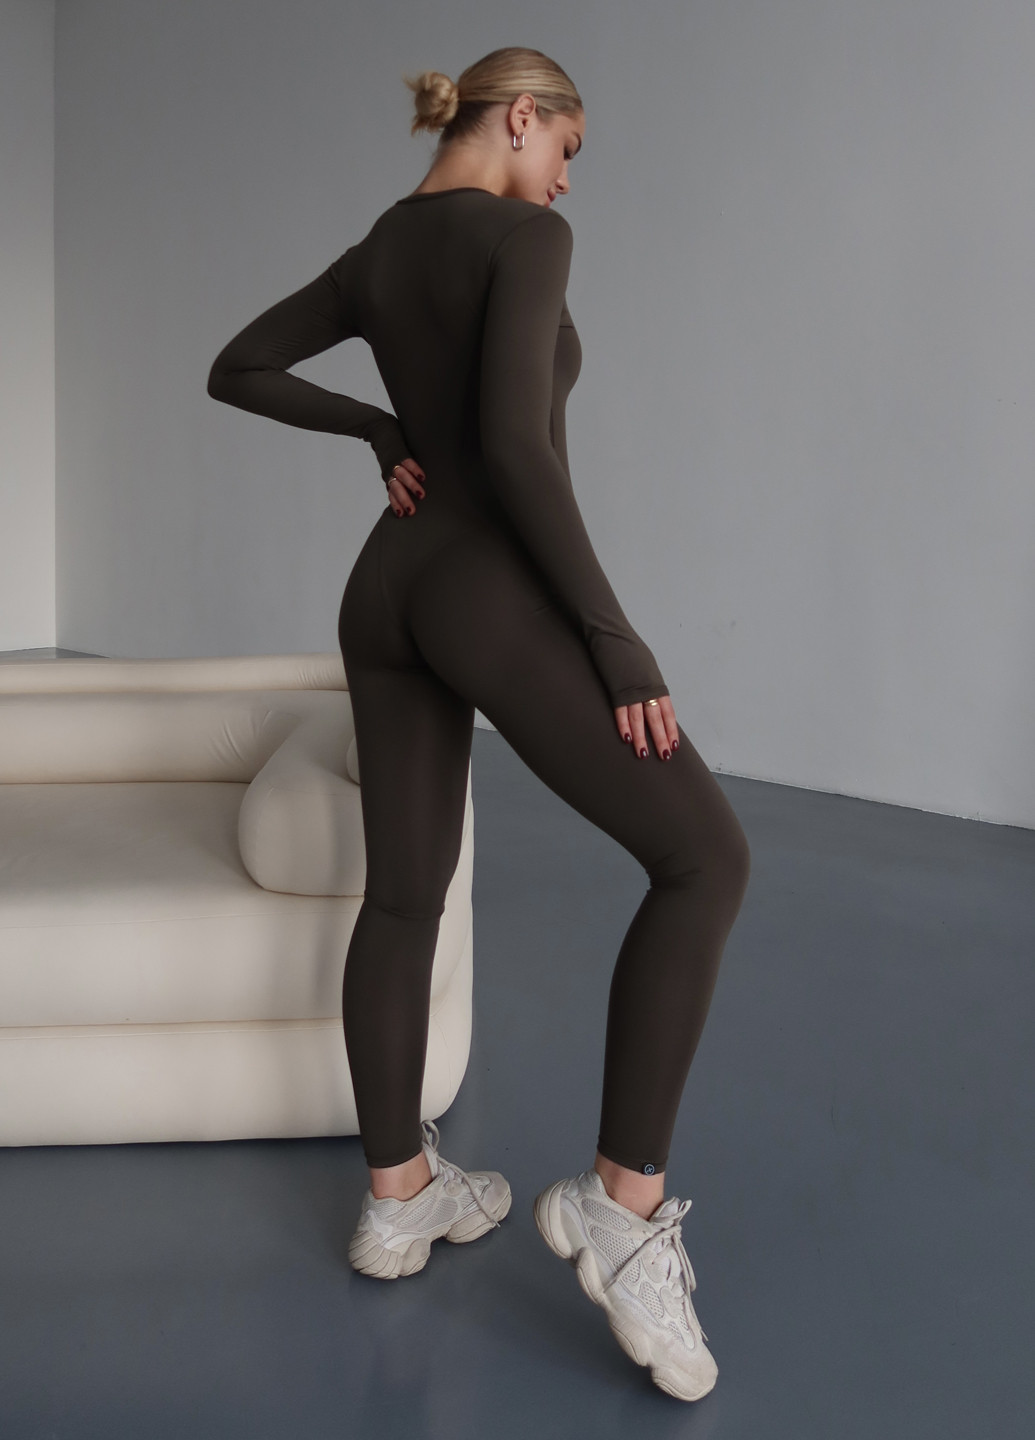 Комбинезон Asalart комбинезон-брюки однотонный спортивный нейлон, трикотаж